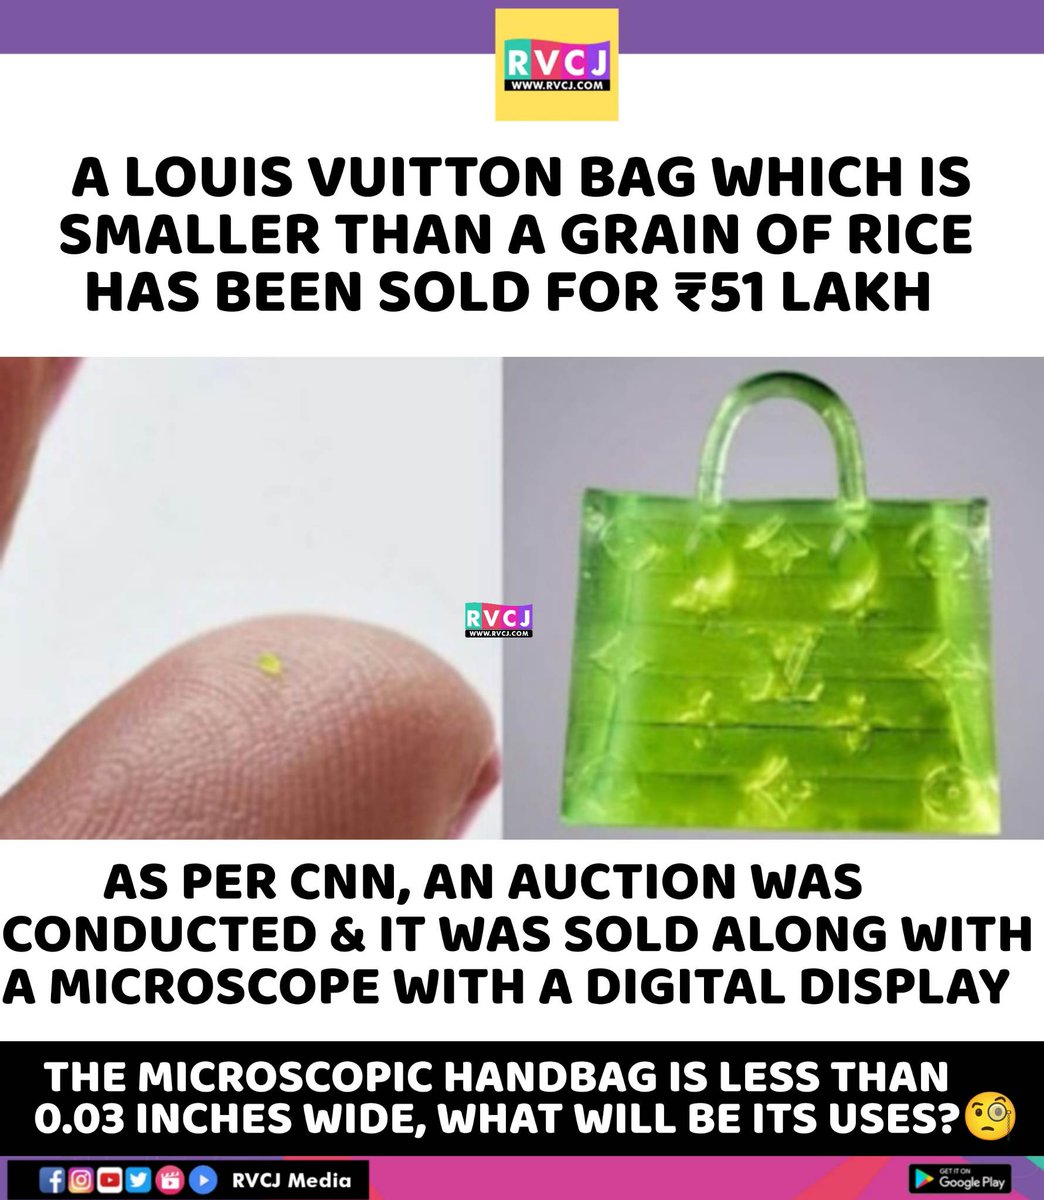 This 'Louis Vuitton' bag is smaller than a grain of rice